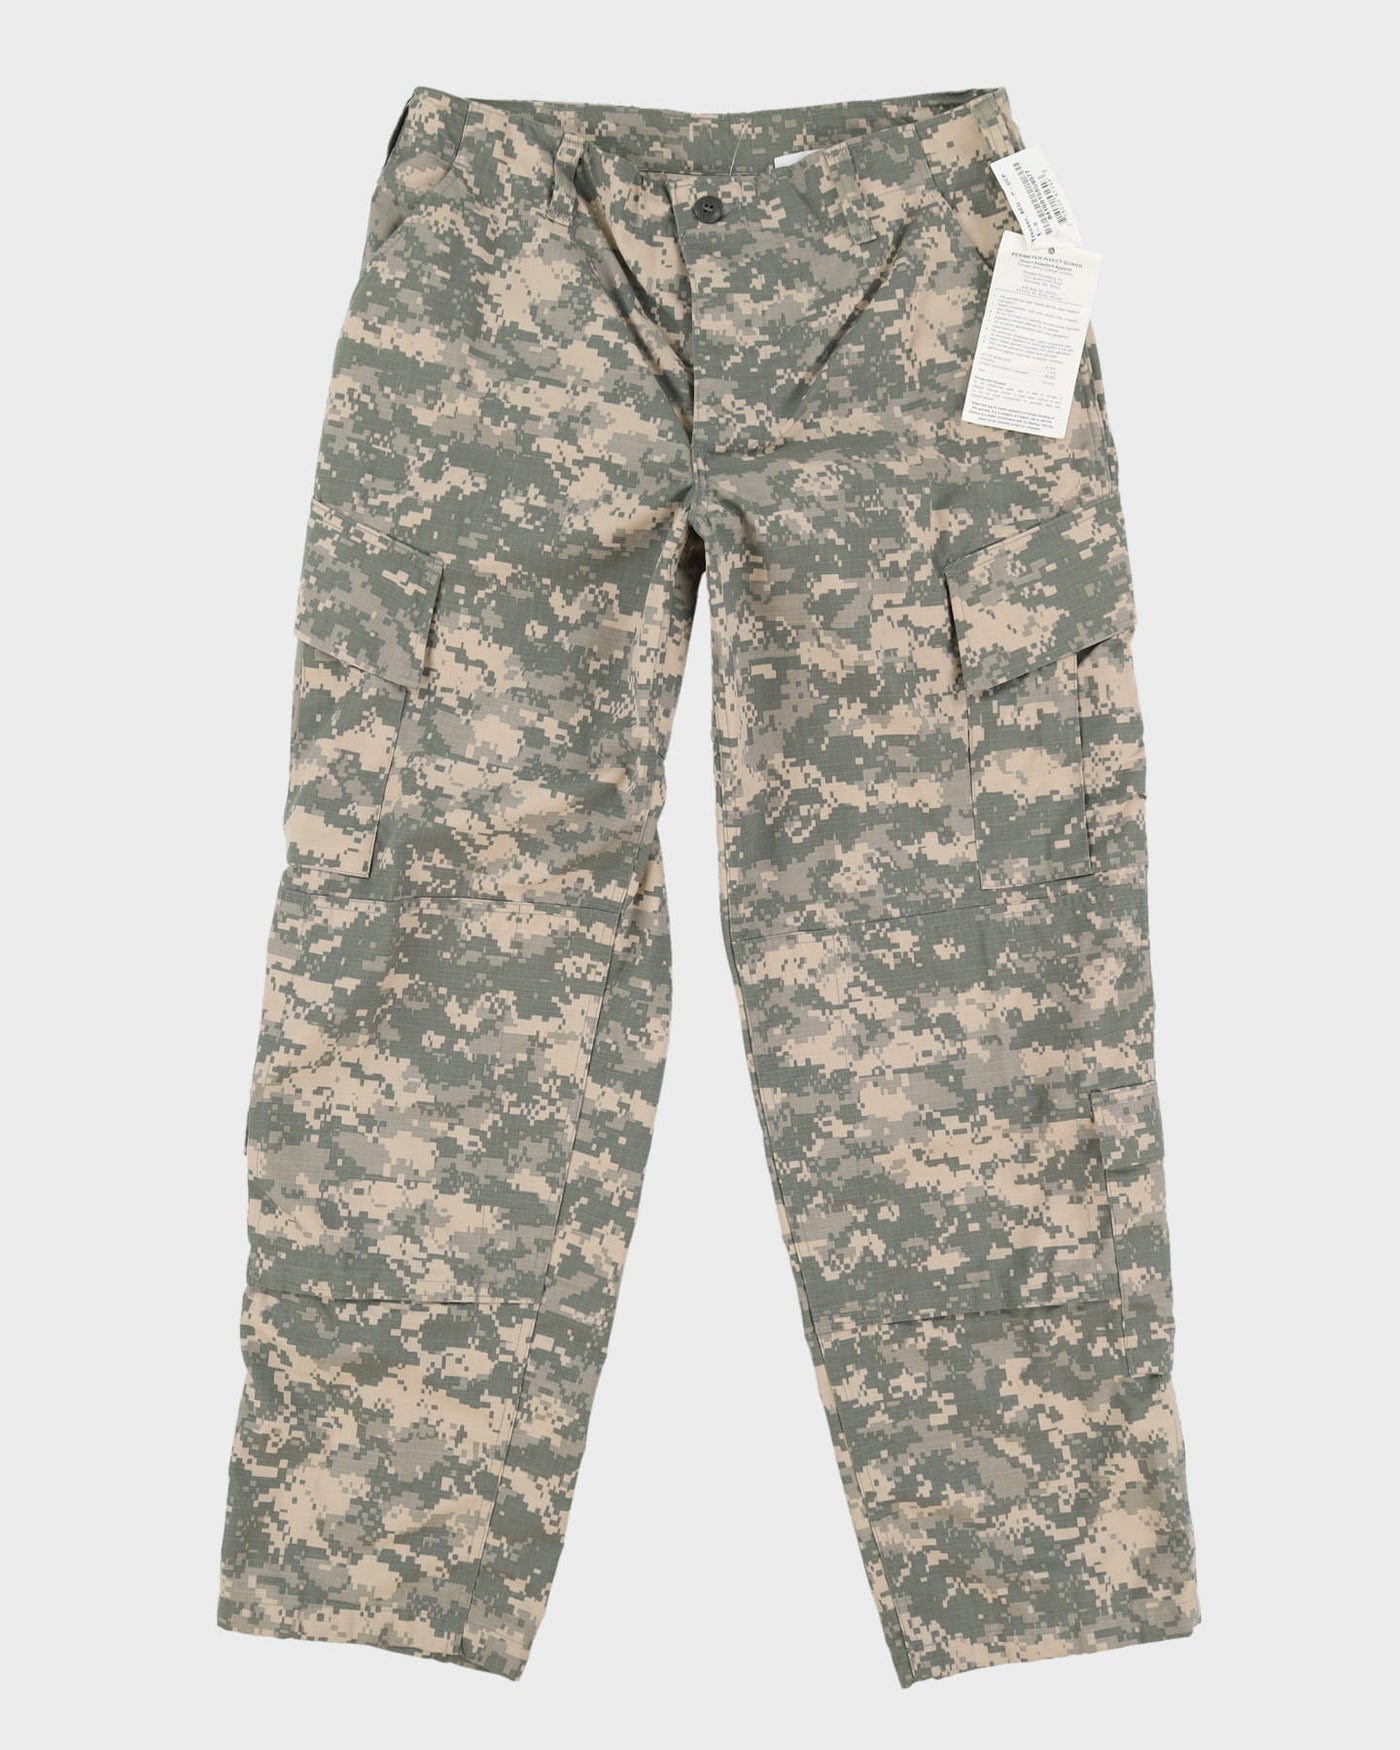 2010s US Army Digital Camo ACU Trousers - 34x30